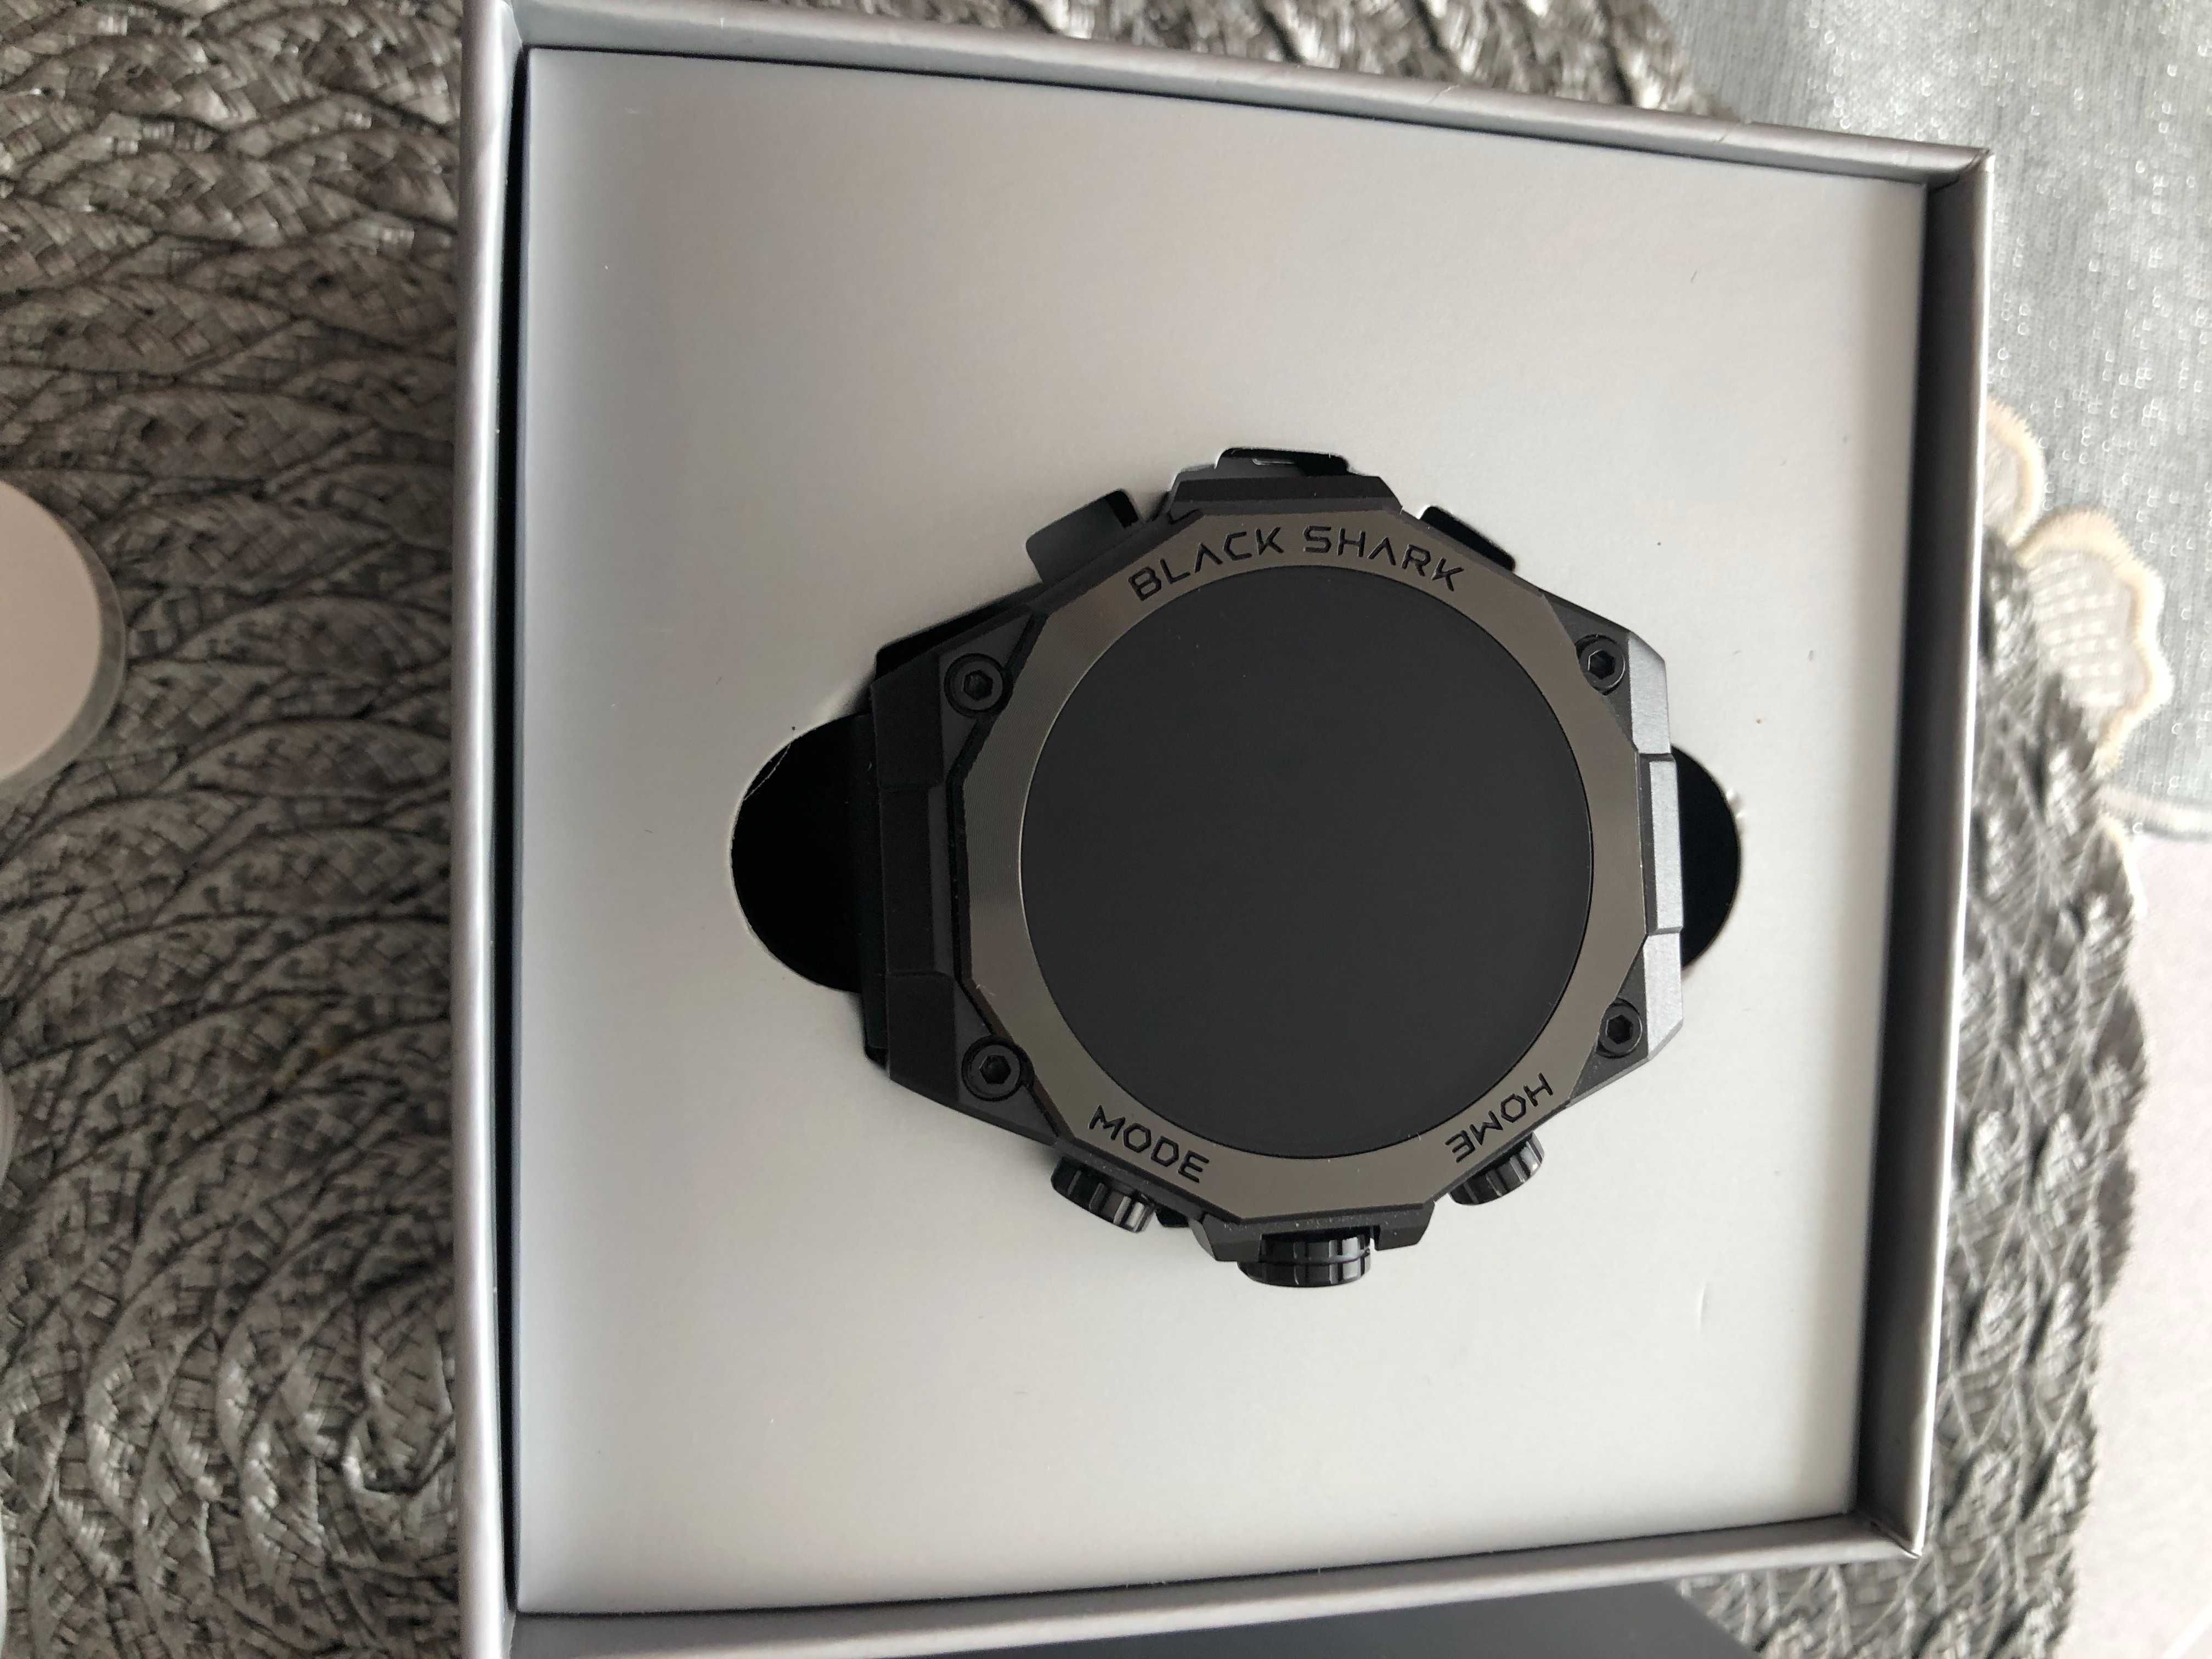 Smartwatch Black Shark S1 Pro - zaproponuj cenę